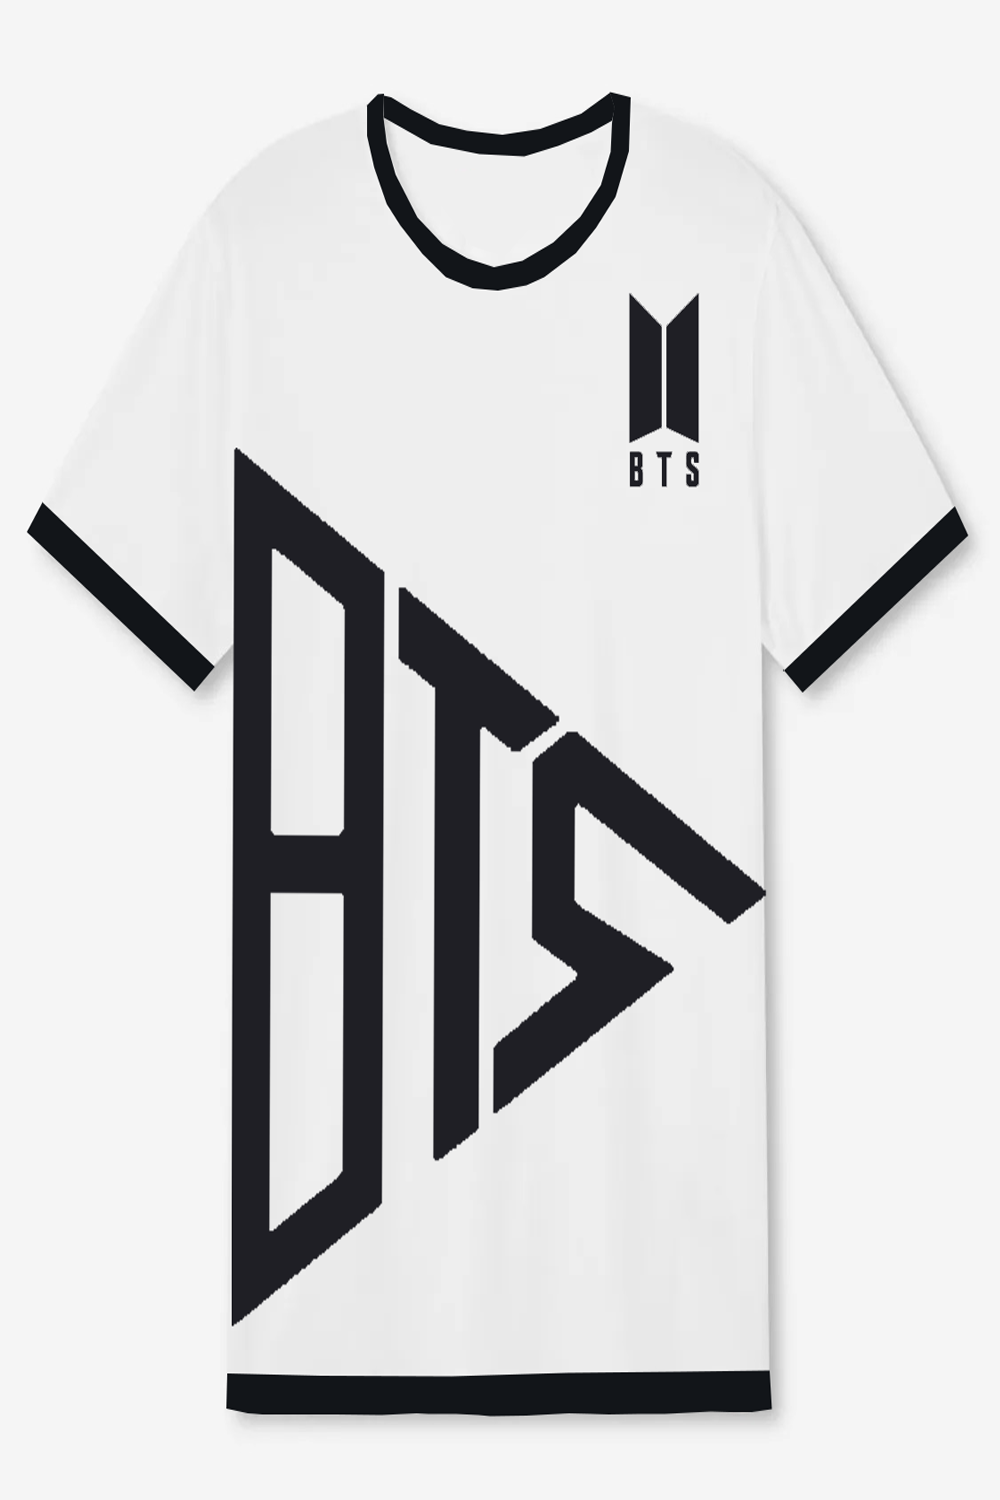 BTS T-Shirts - MasterBundles